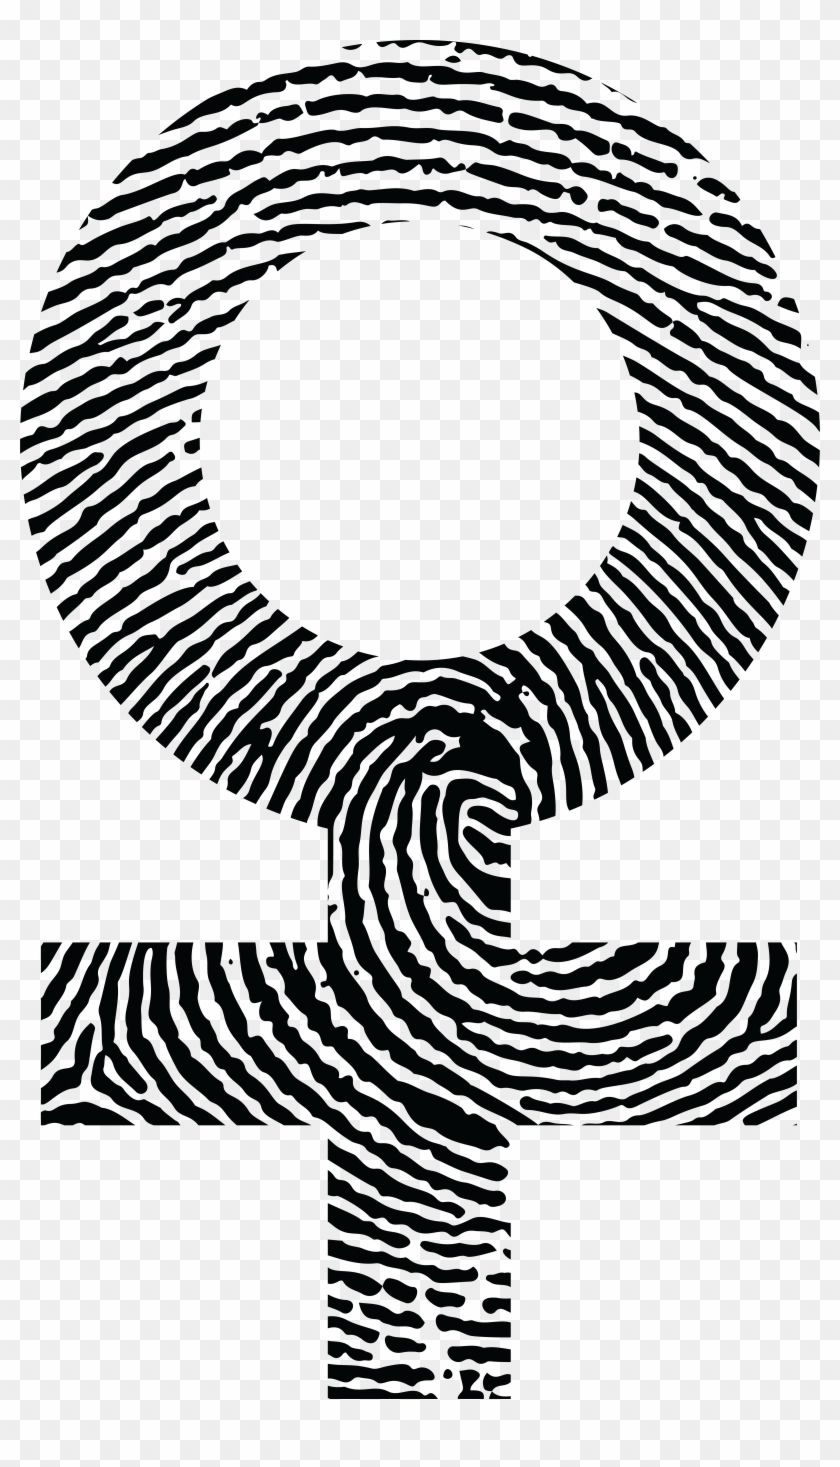 Free Clipart Of A Thumb Print Female Gender Symbol - Finger Print Spiral #371587